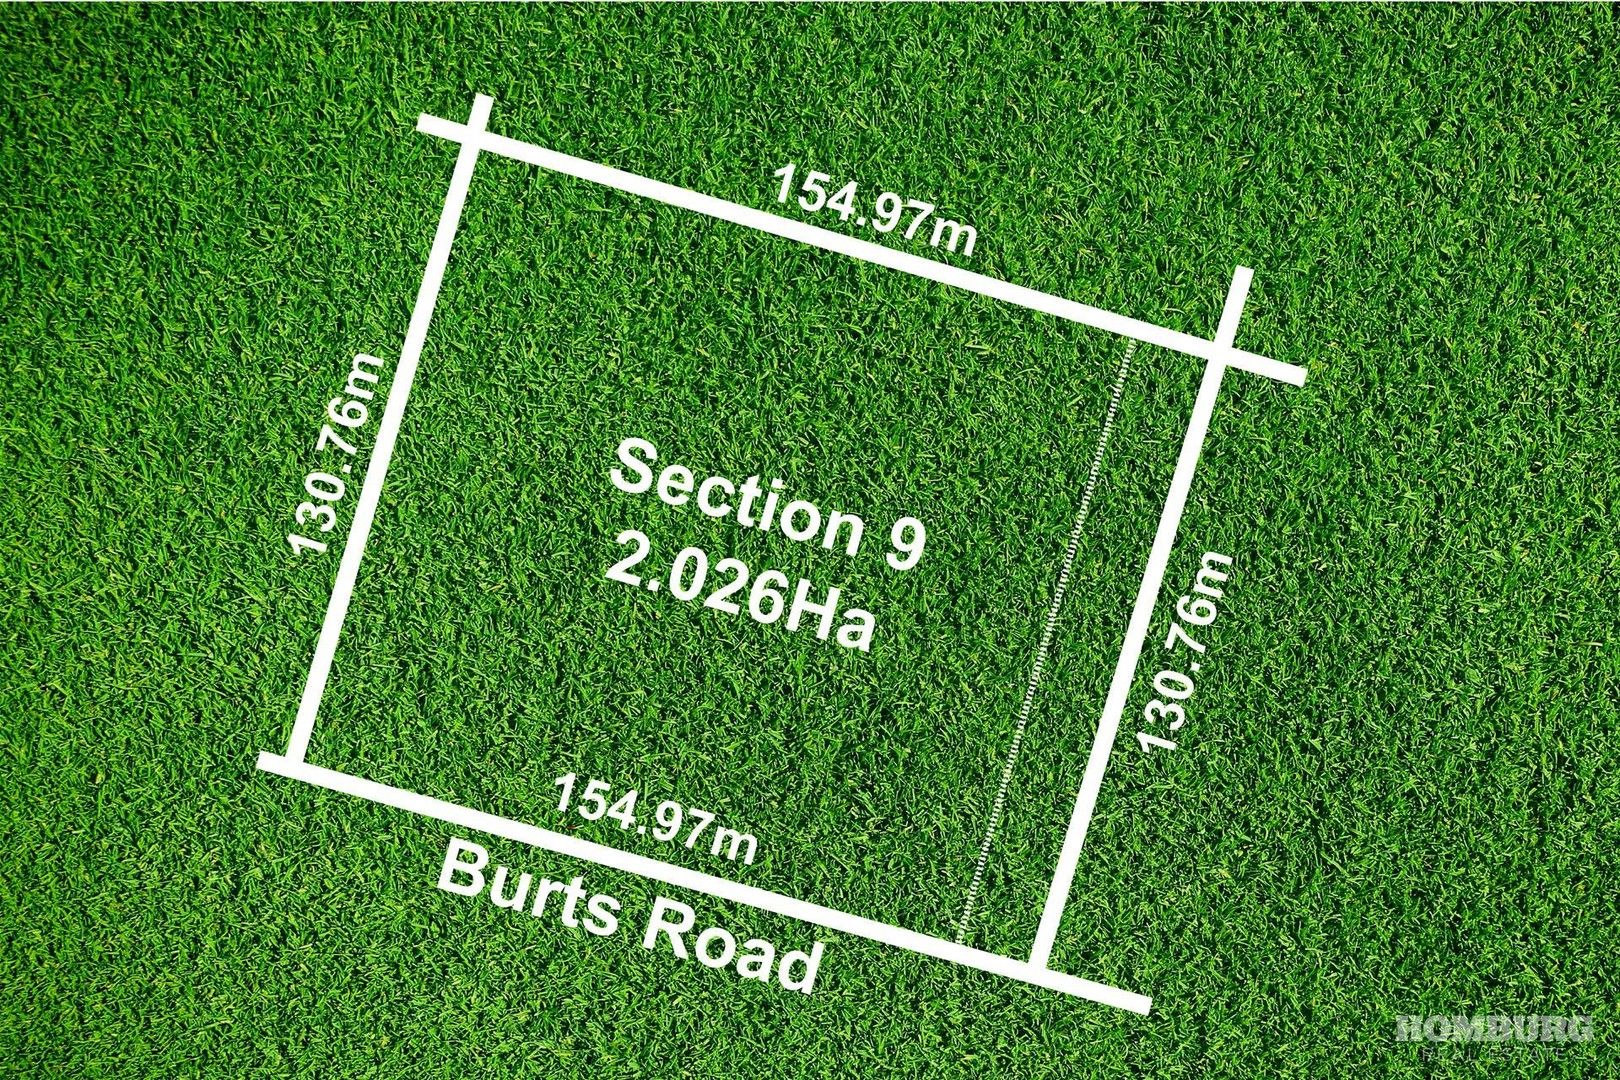 Lot 9 Burts Road, Dutton SA 5356